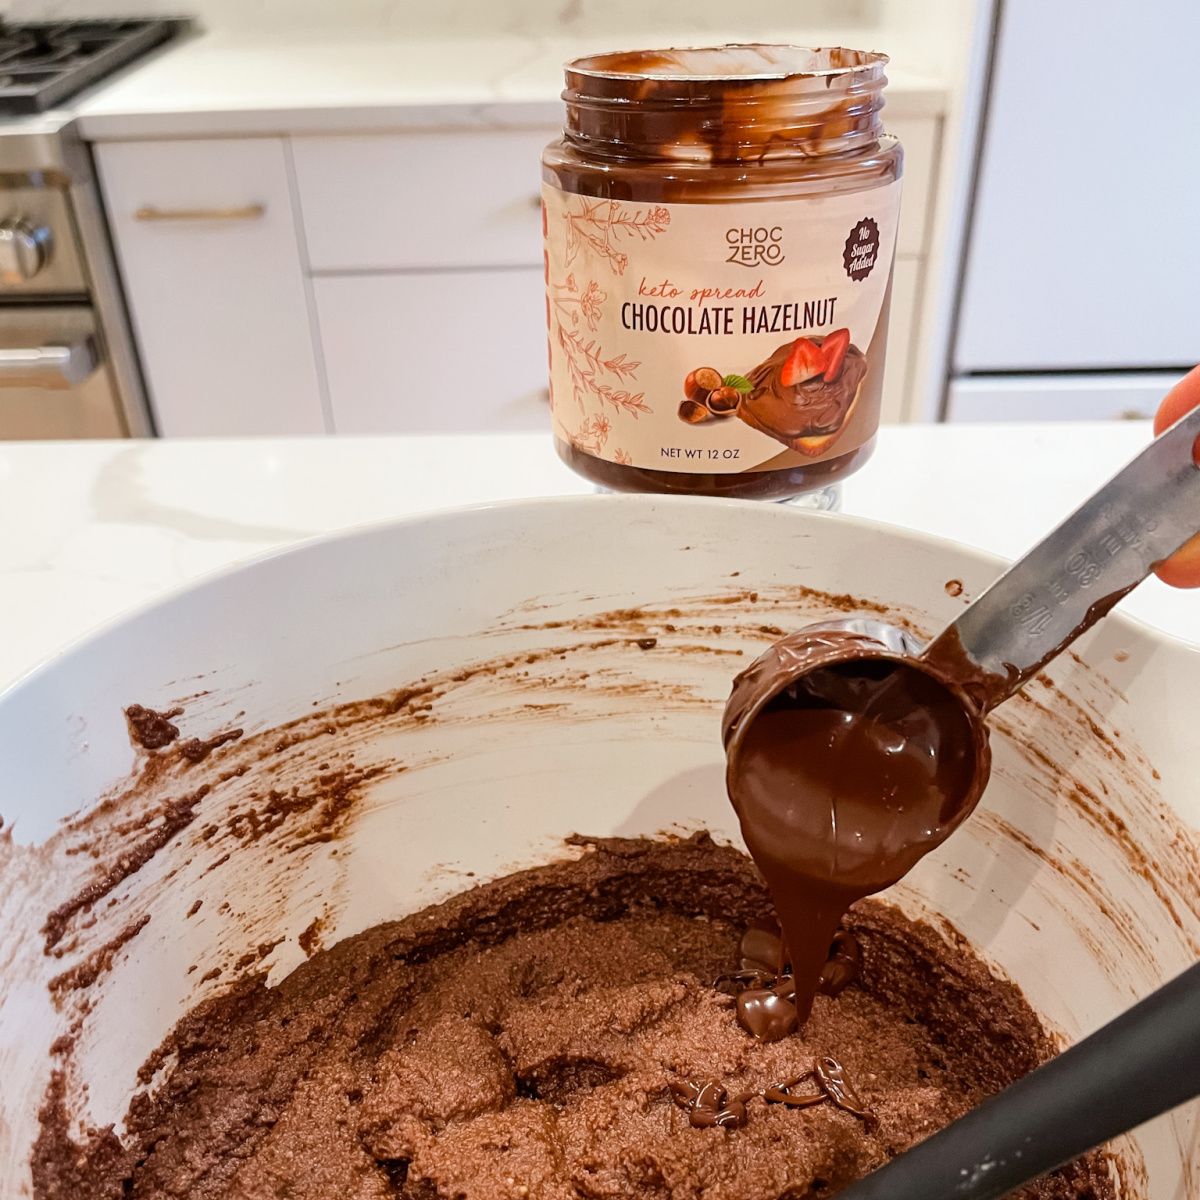 Chocolate Hazelnut spread going in cake batter